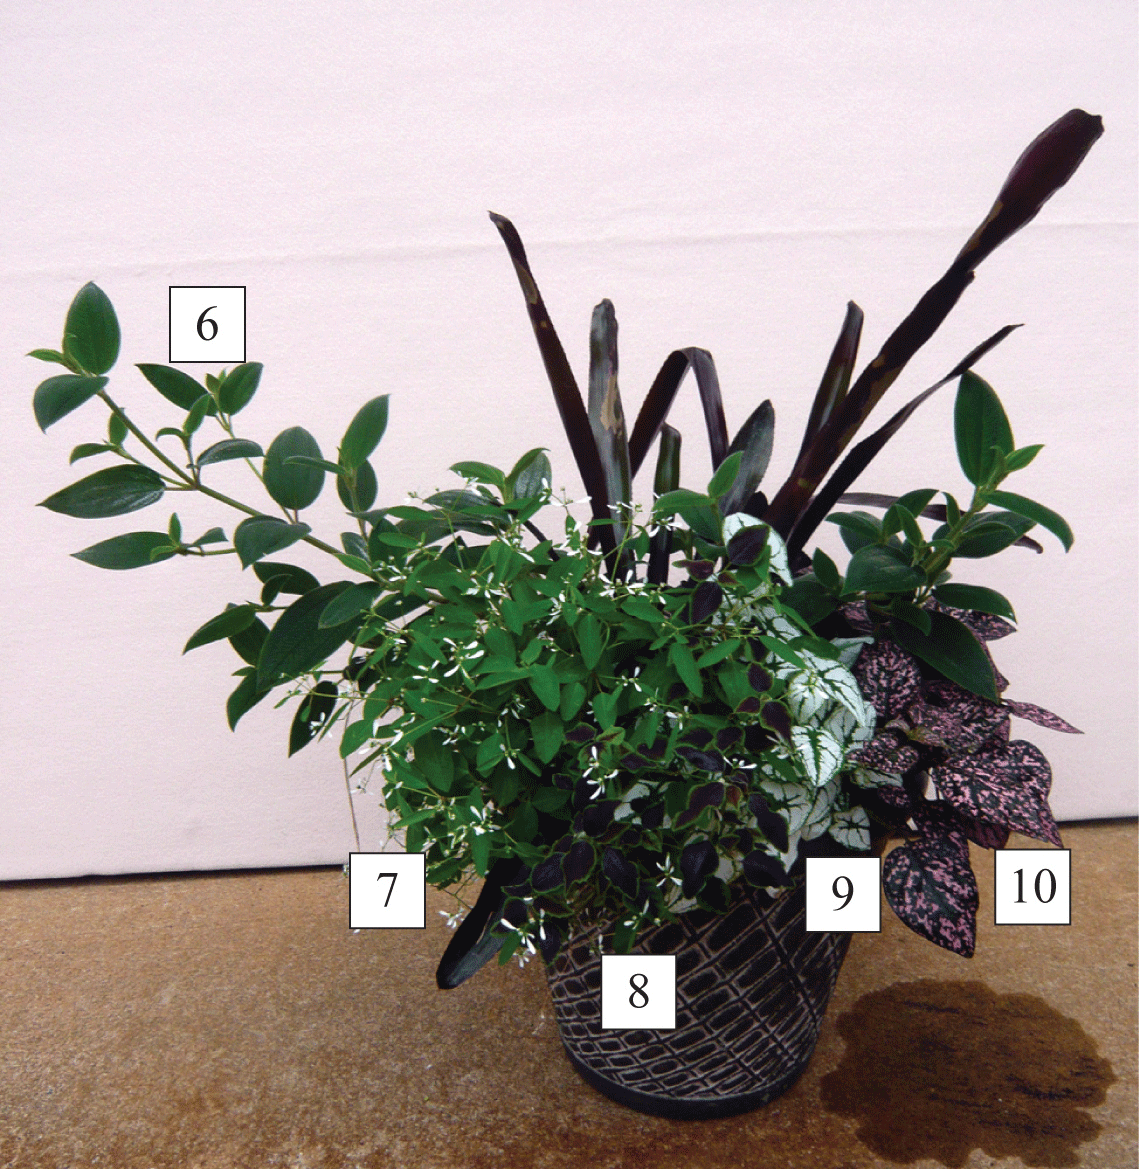 sun/shade container with plants labeled 6-10, corresponding to Brazilian spider flower, Euphorbia ‘Diamond Frost’, Euphorbia ‘Flameleaf’, Caladium ‘Mini White’, and Polka-dot plant